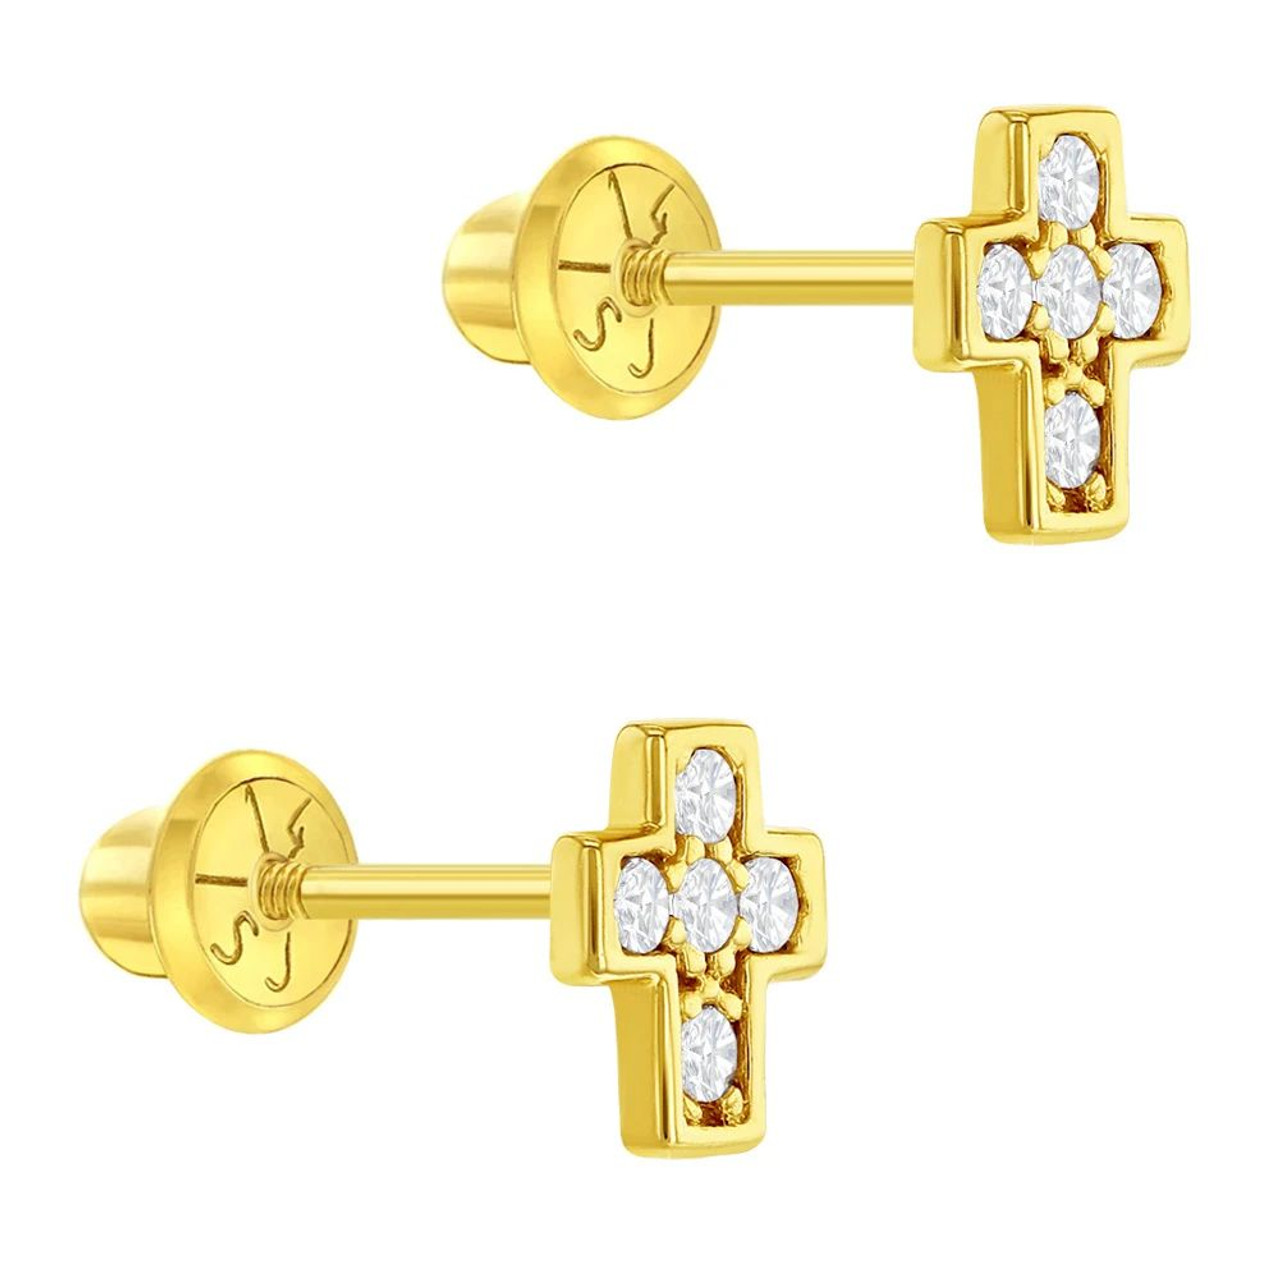 Christening Keepsakes™ - 14K Yellow Gold Screw Back Cubic Zirconia (CZ)  Cross Earrings for Girls - Safety threaded screw back post - BEST SELLER